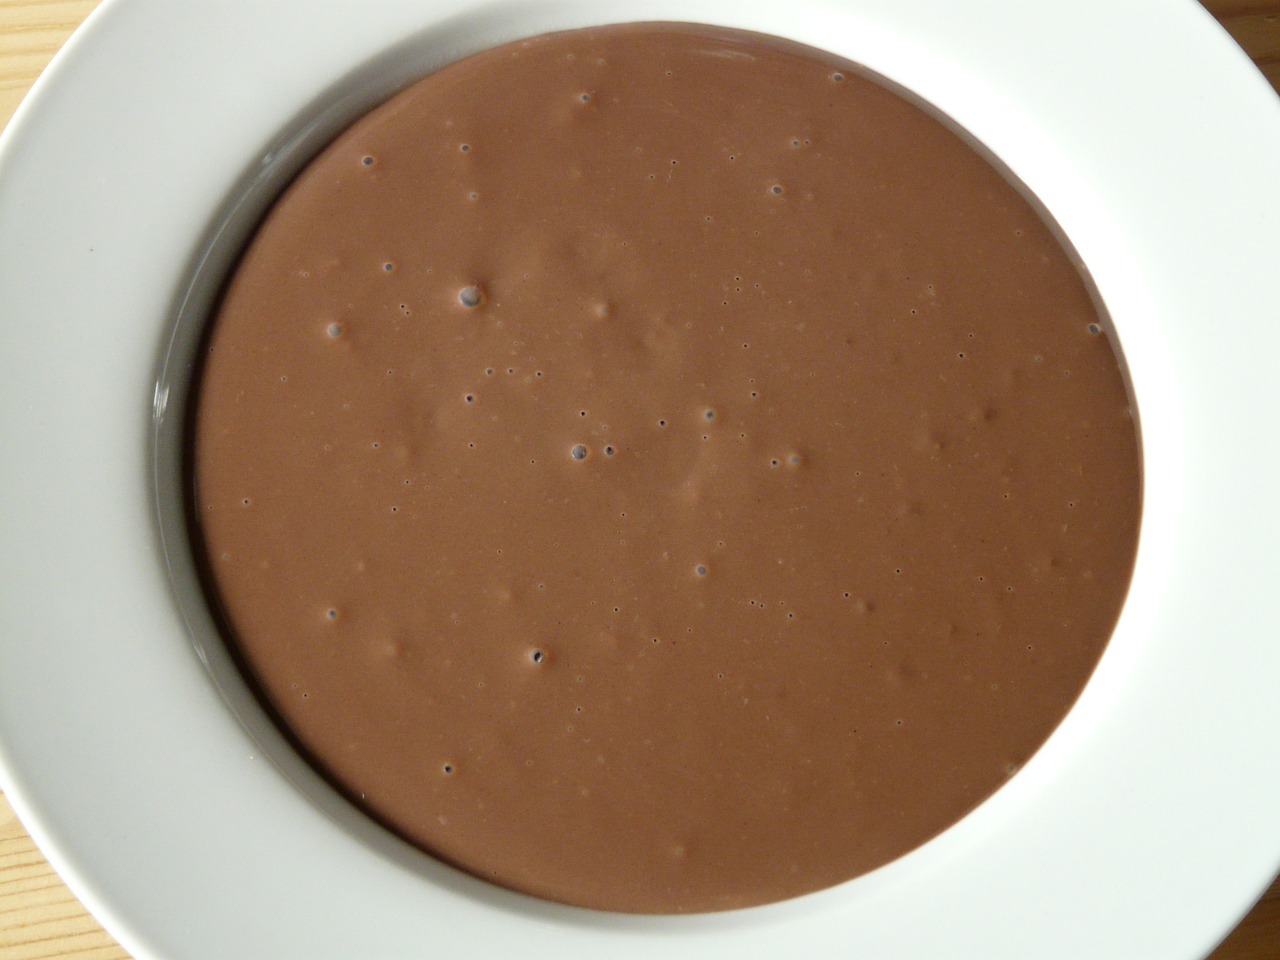 Wonderful Homemade Chocolate Pudding Mix